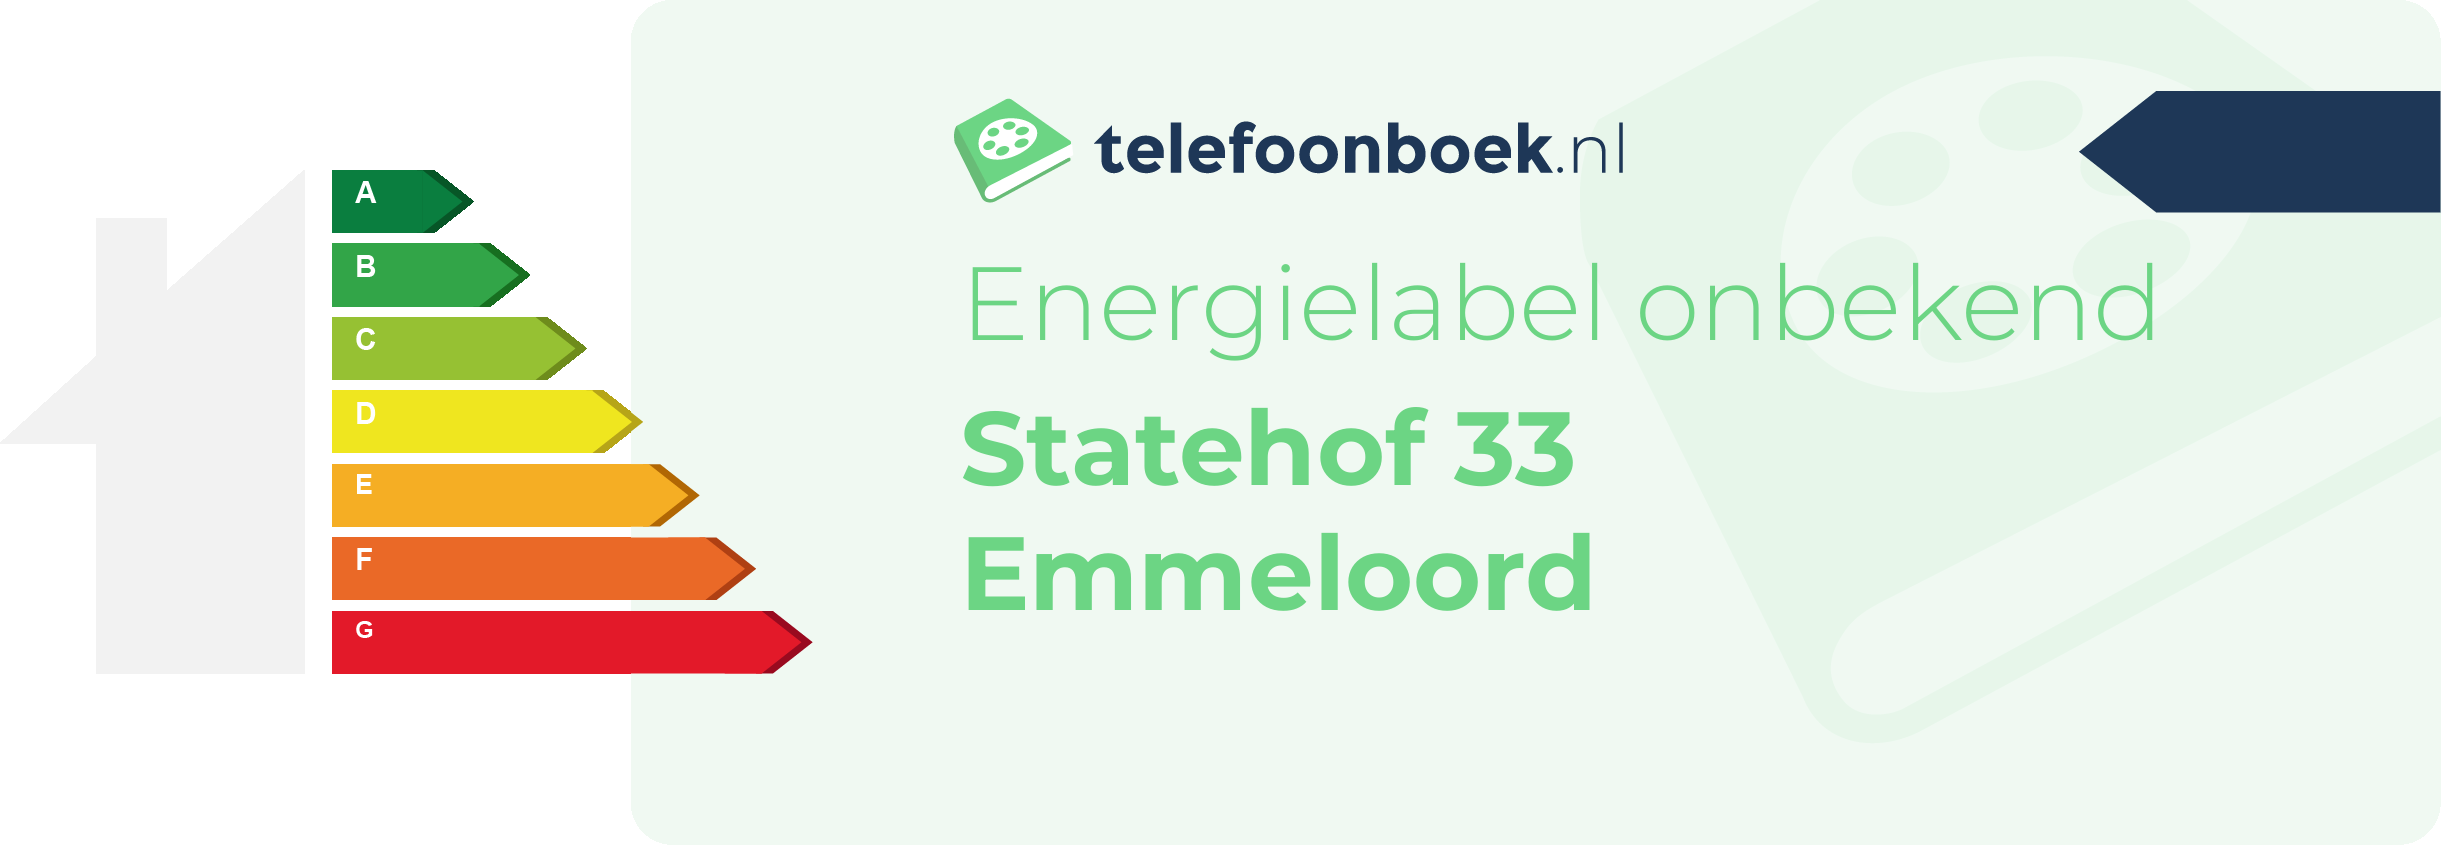 Energielabel Statehof 33 Emmeloord